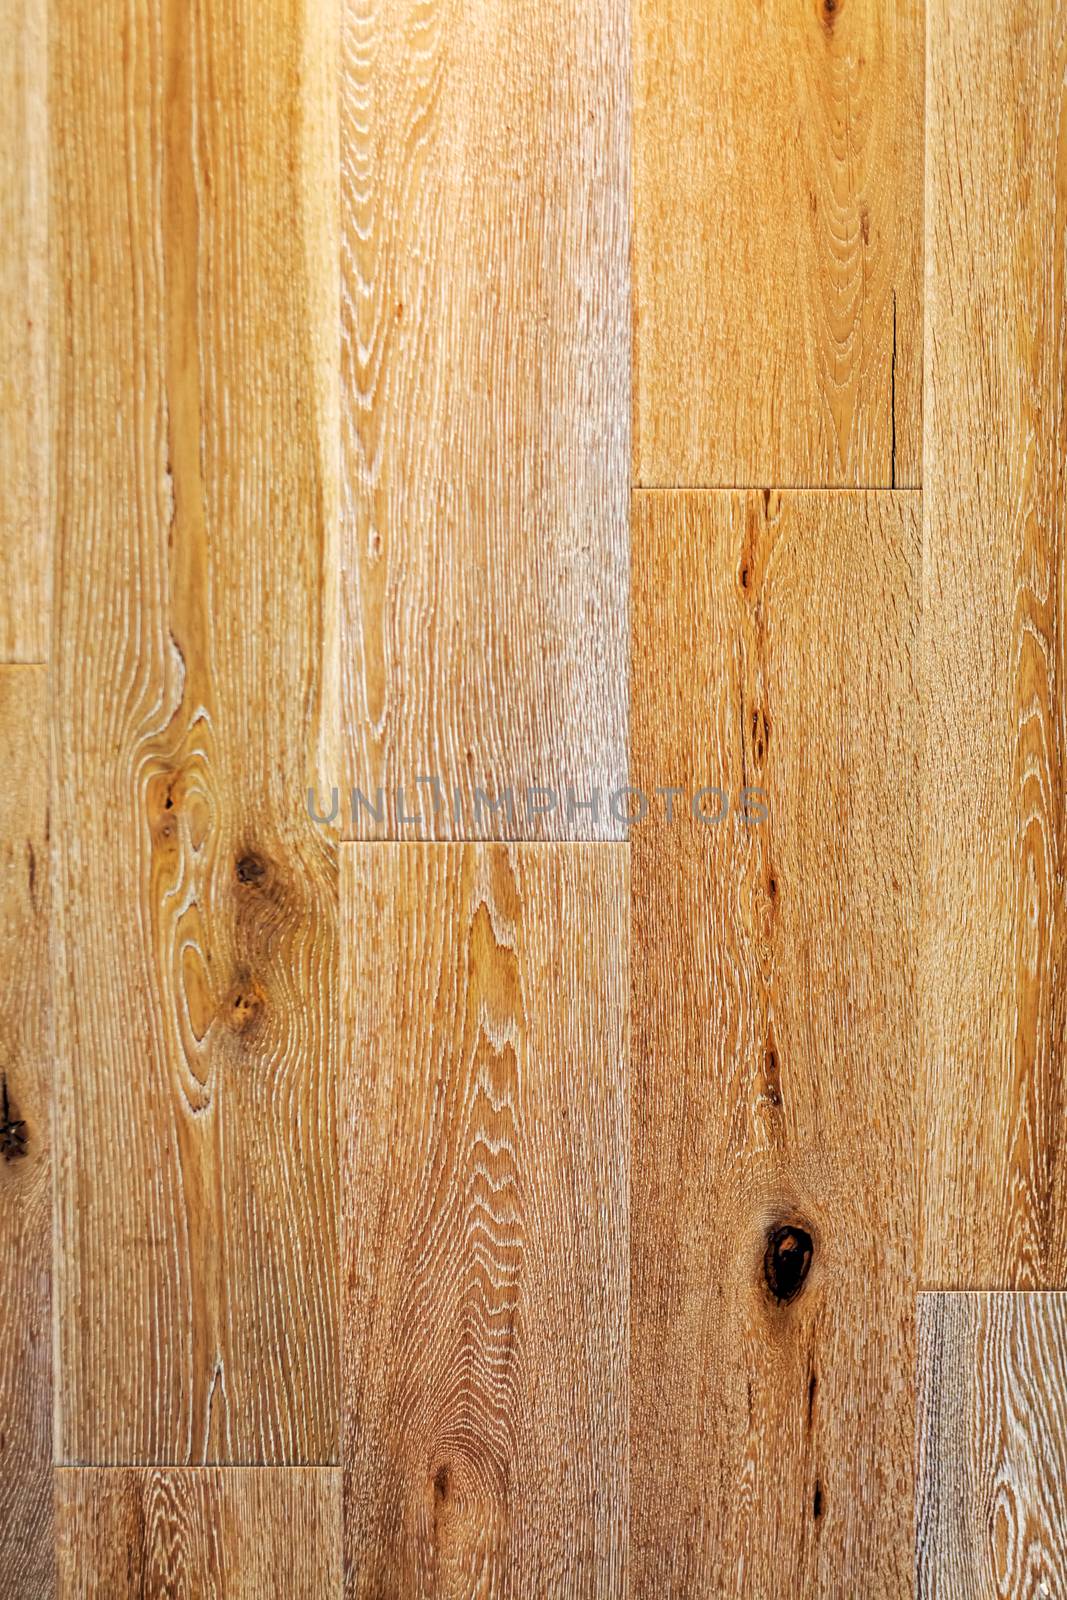 texture of wooden worm colored parquet floor